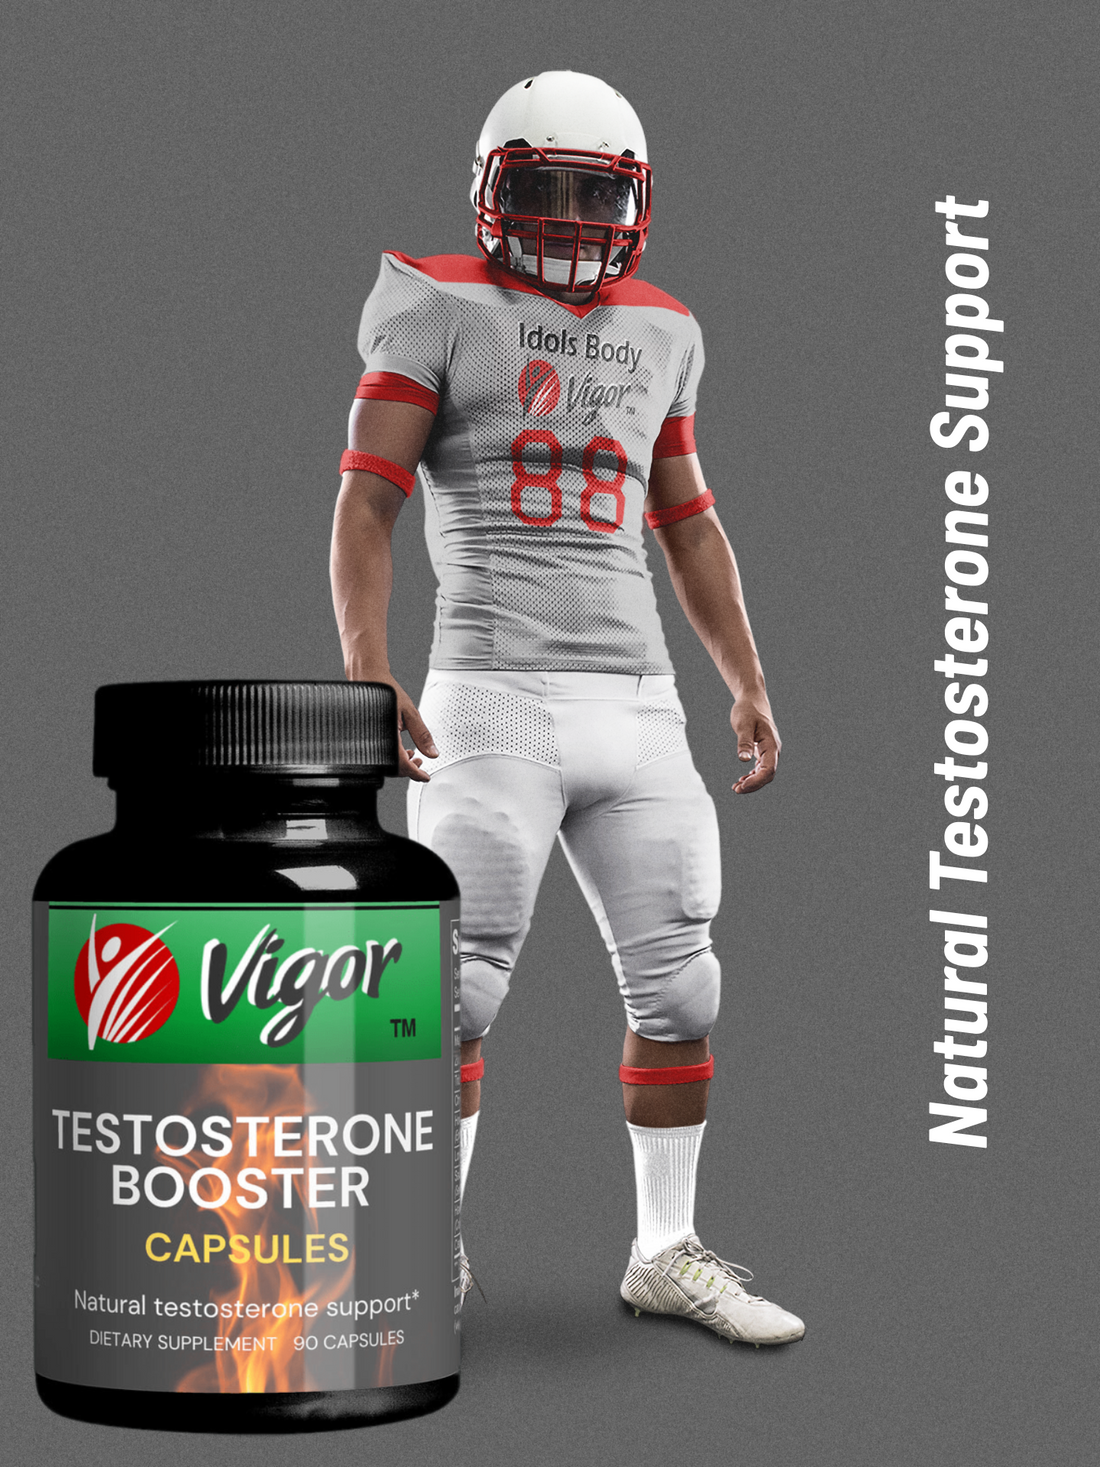 custom-football-jerseys-muscular-man-standing-against-a-solid-testosterone-supplement-jar